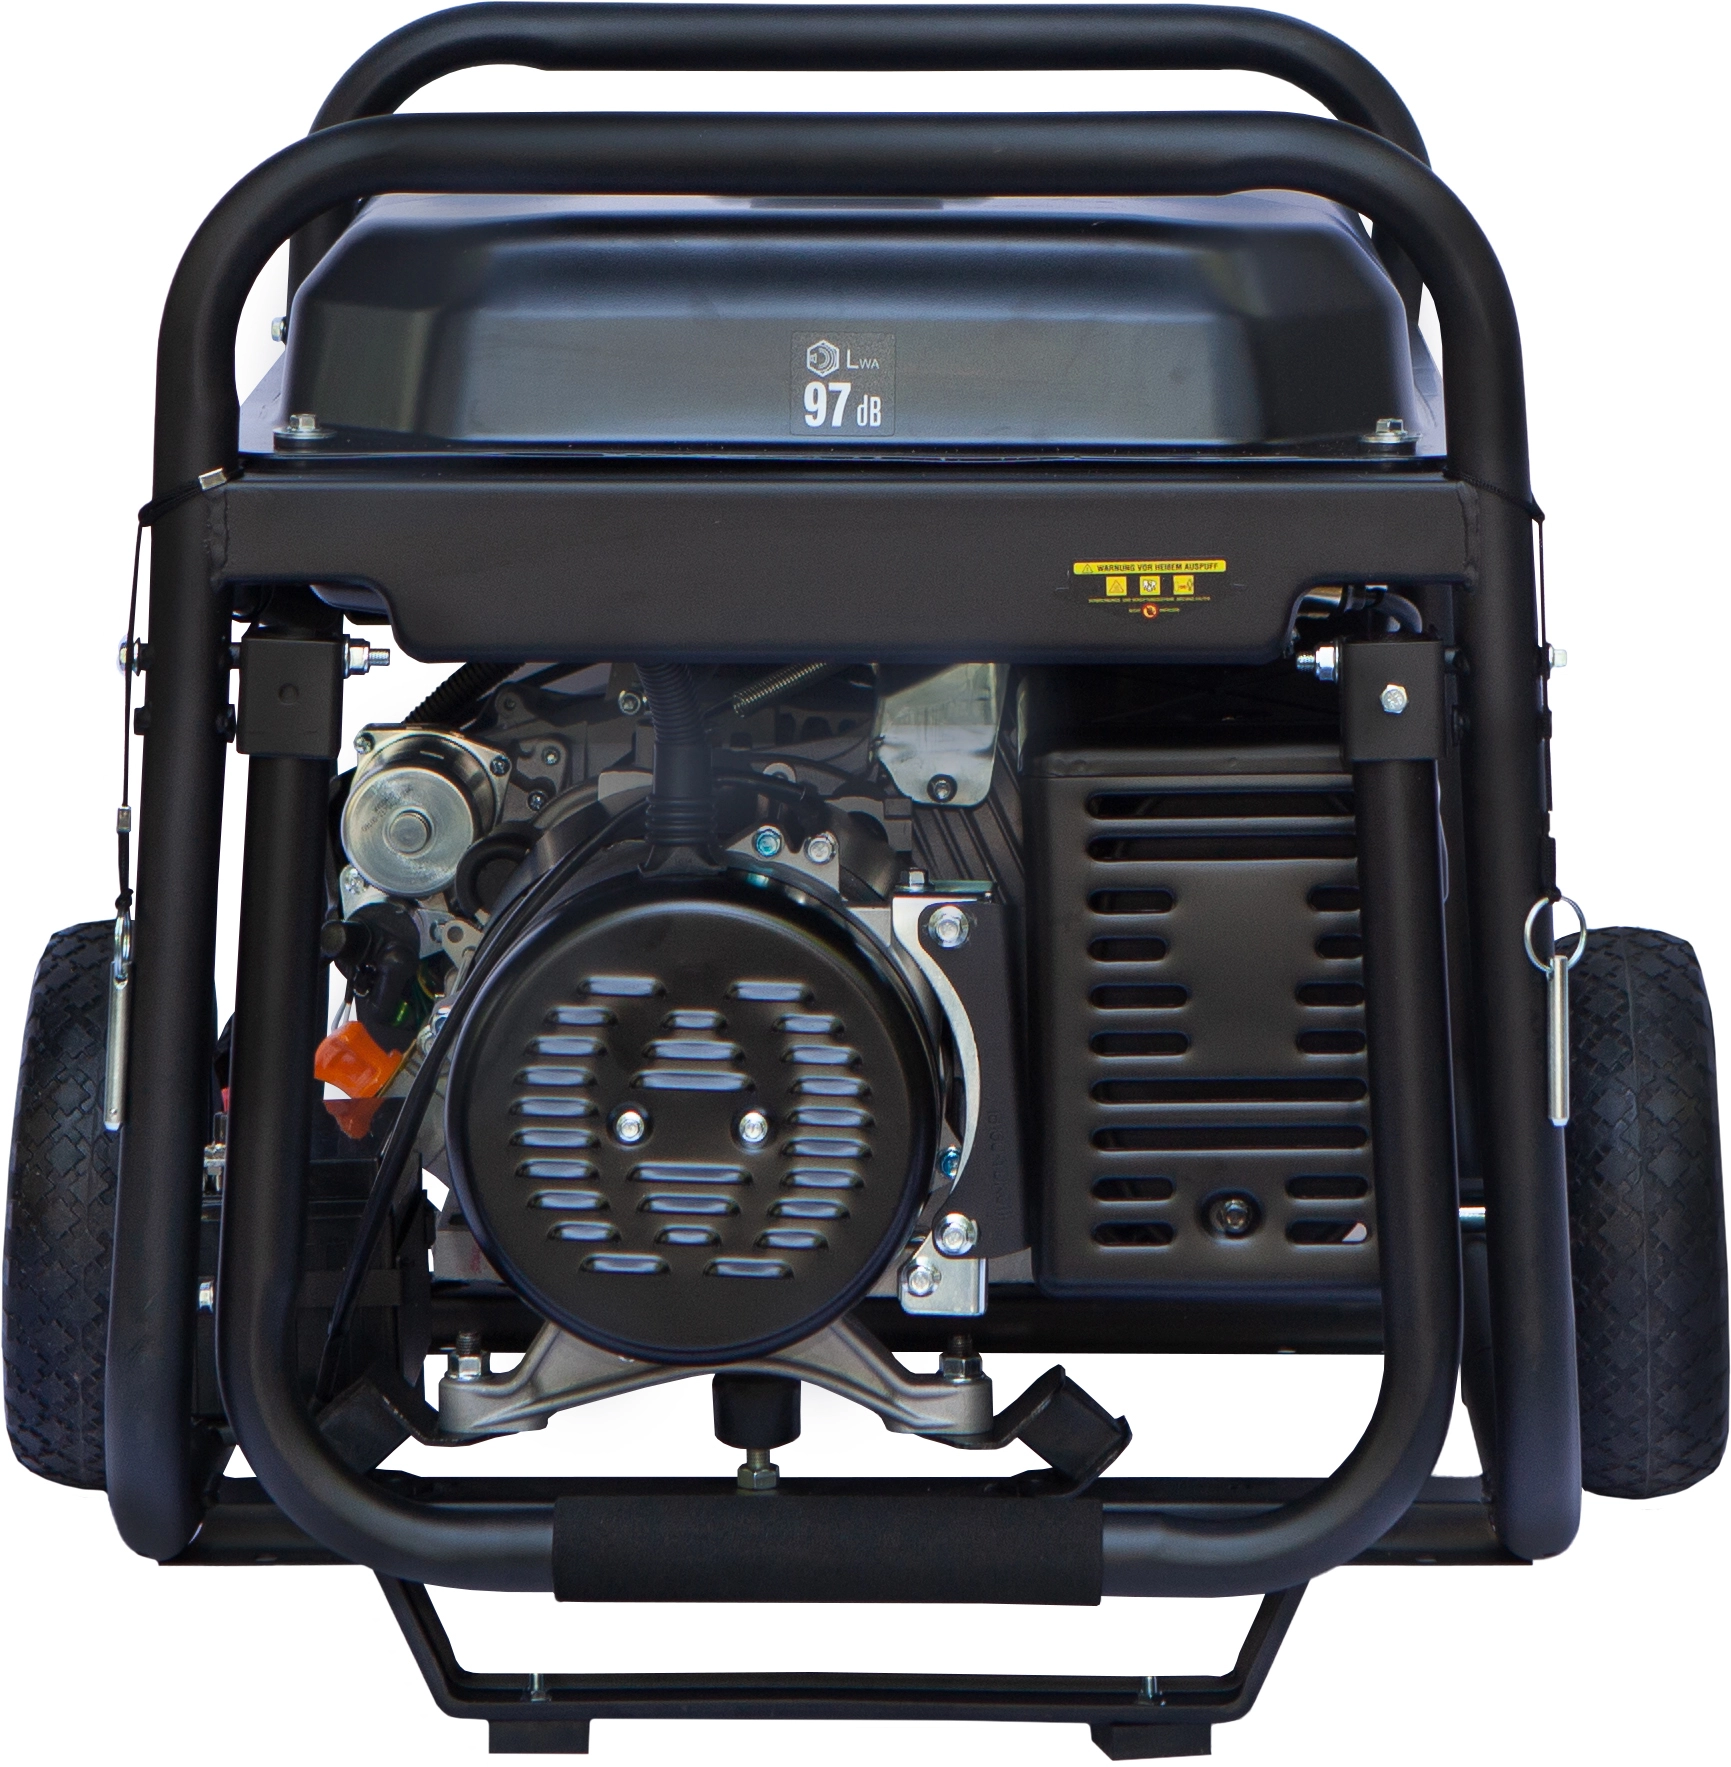 Hyundai Notstromaggregat HY8500LEK-T 7,7 kW/16,3 PS bei OBI